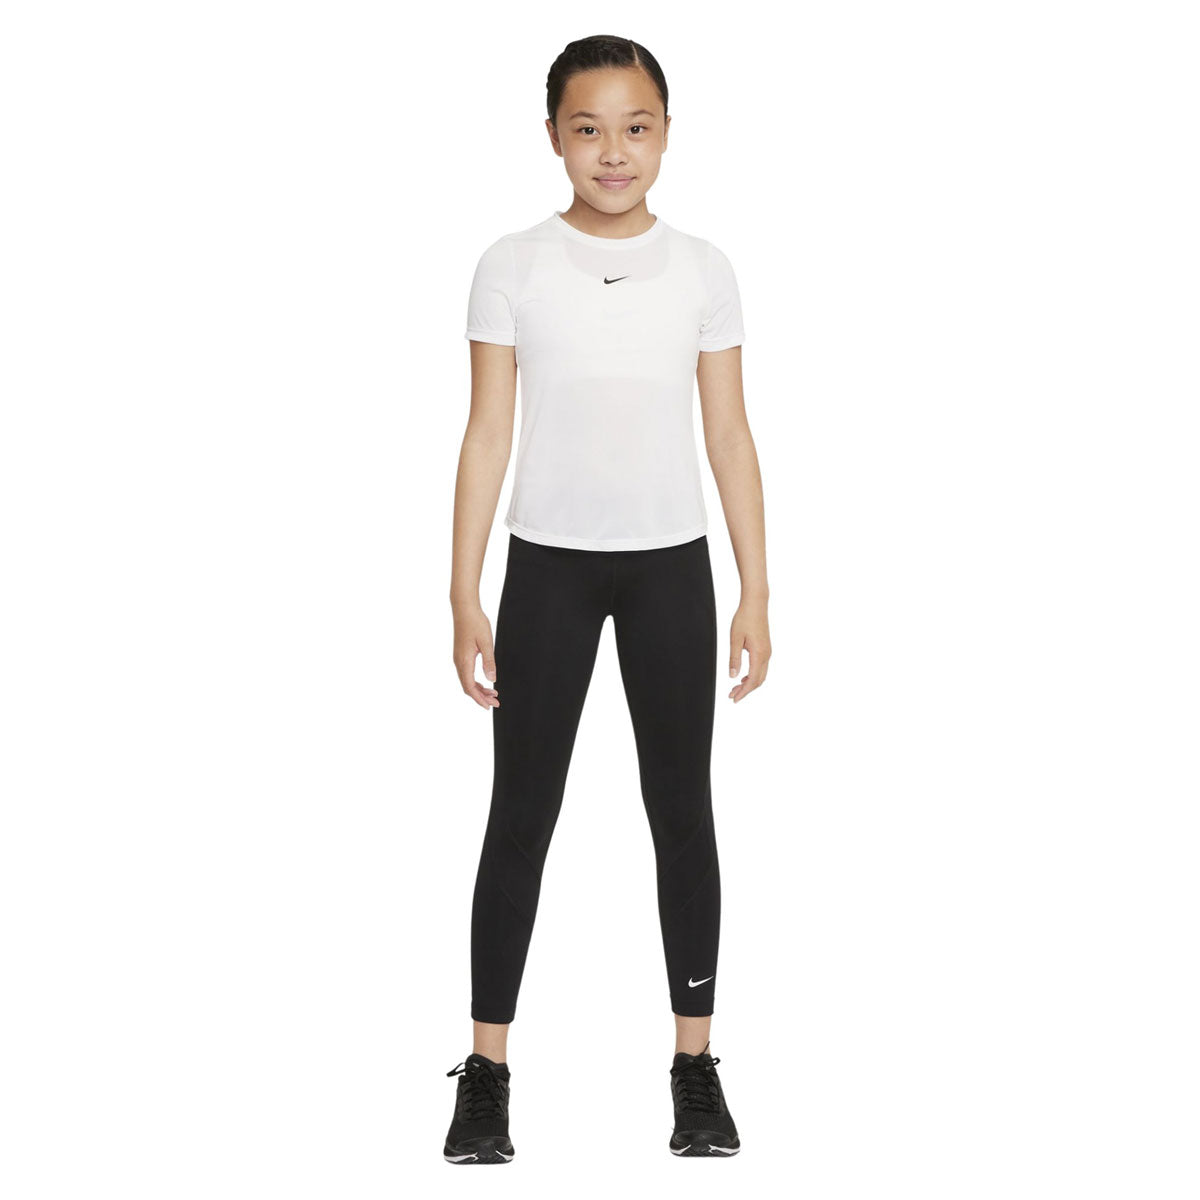 Nike Kids Dri-FIT One Short-Sleeve Top